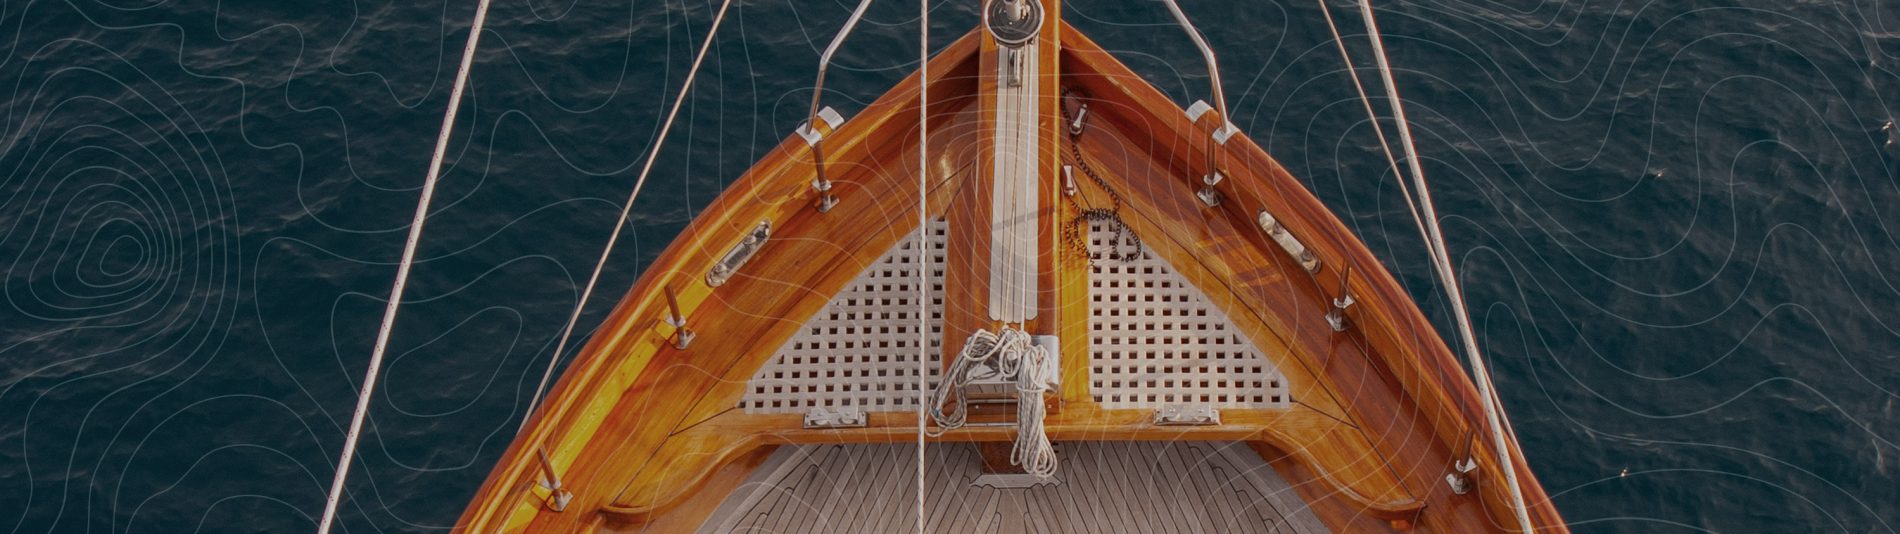 Teak grating on sailing yacht at sea